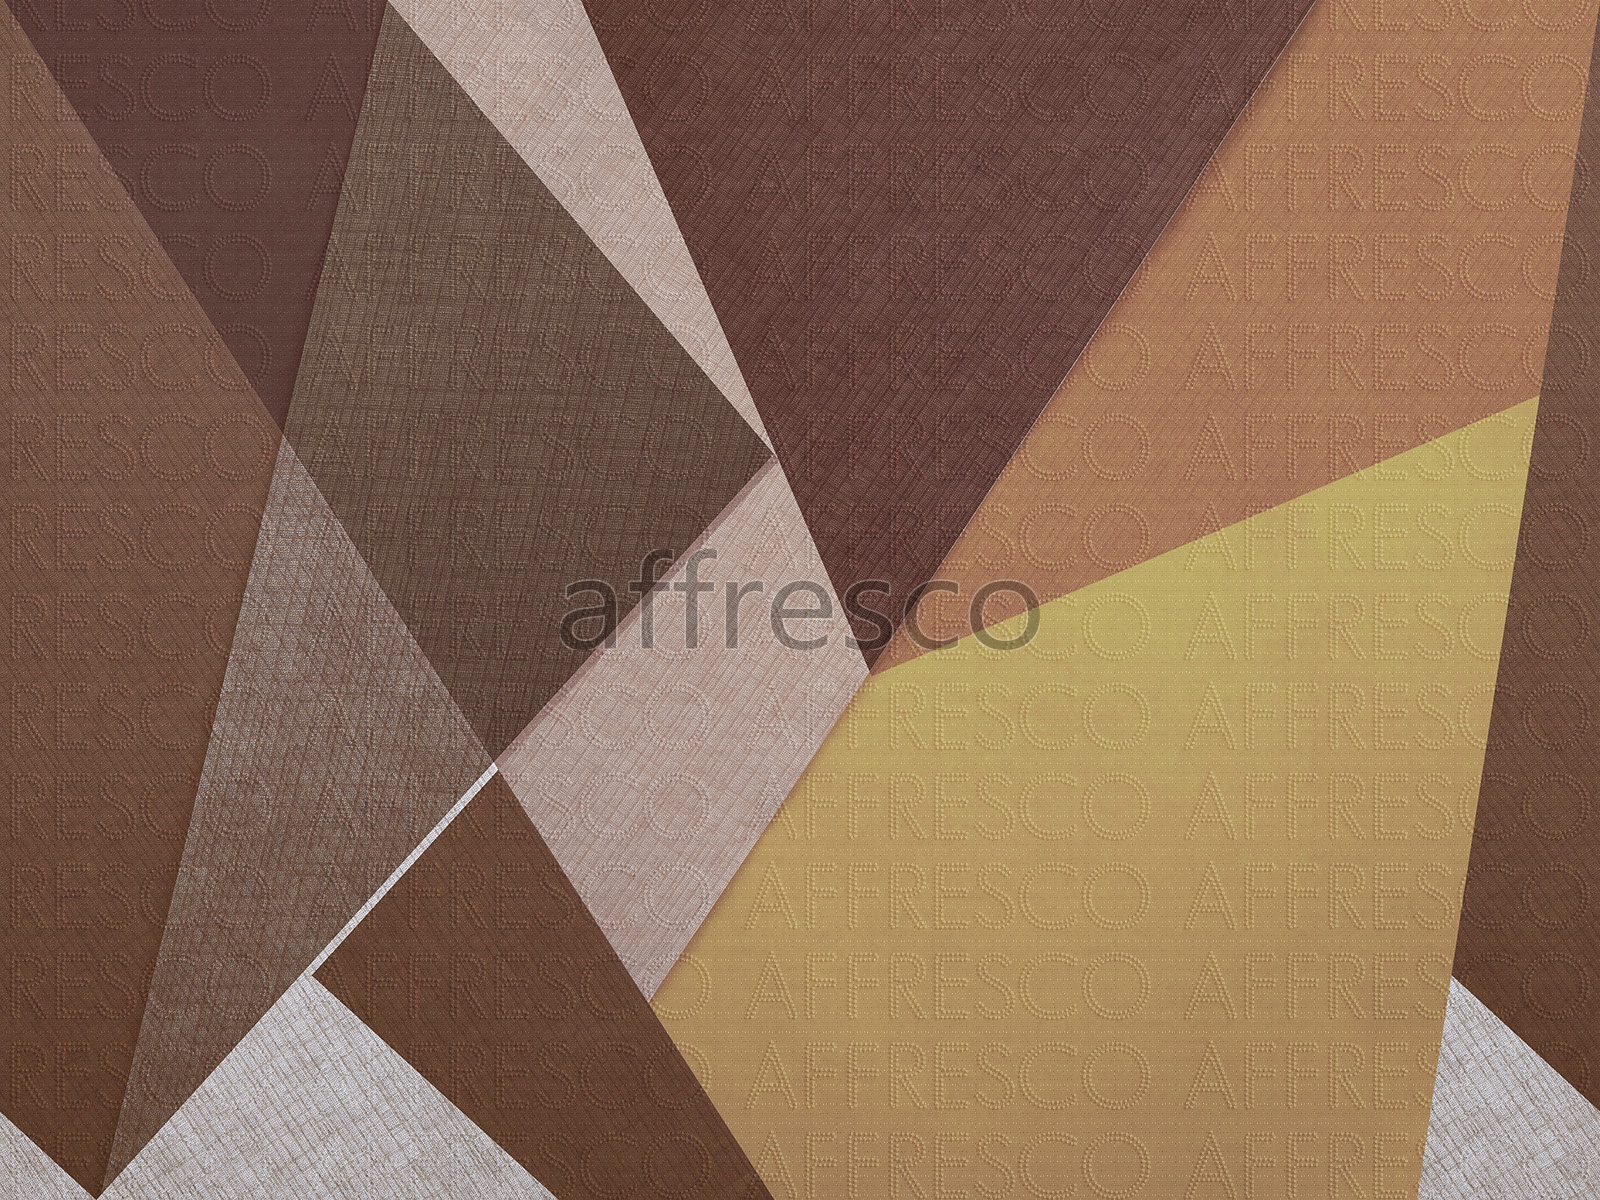 RE866-COL4 | Fine Art | Affresco Factory